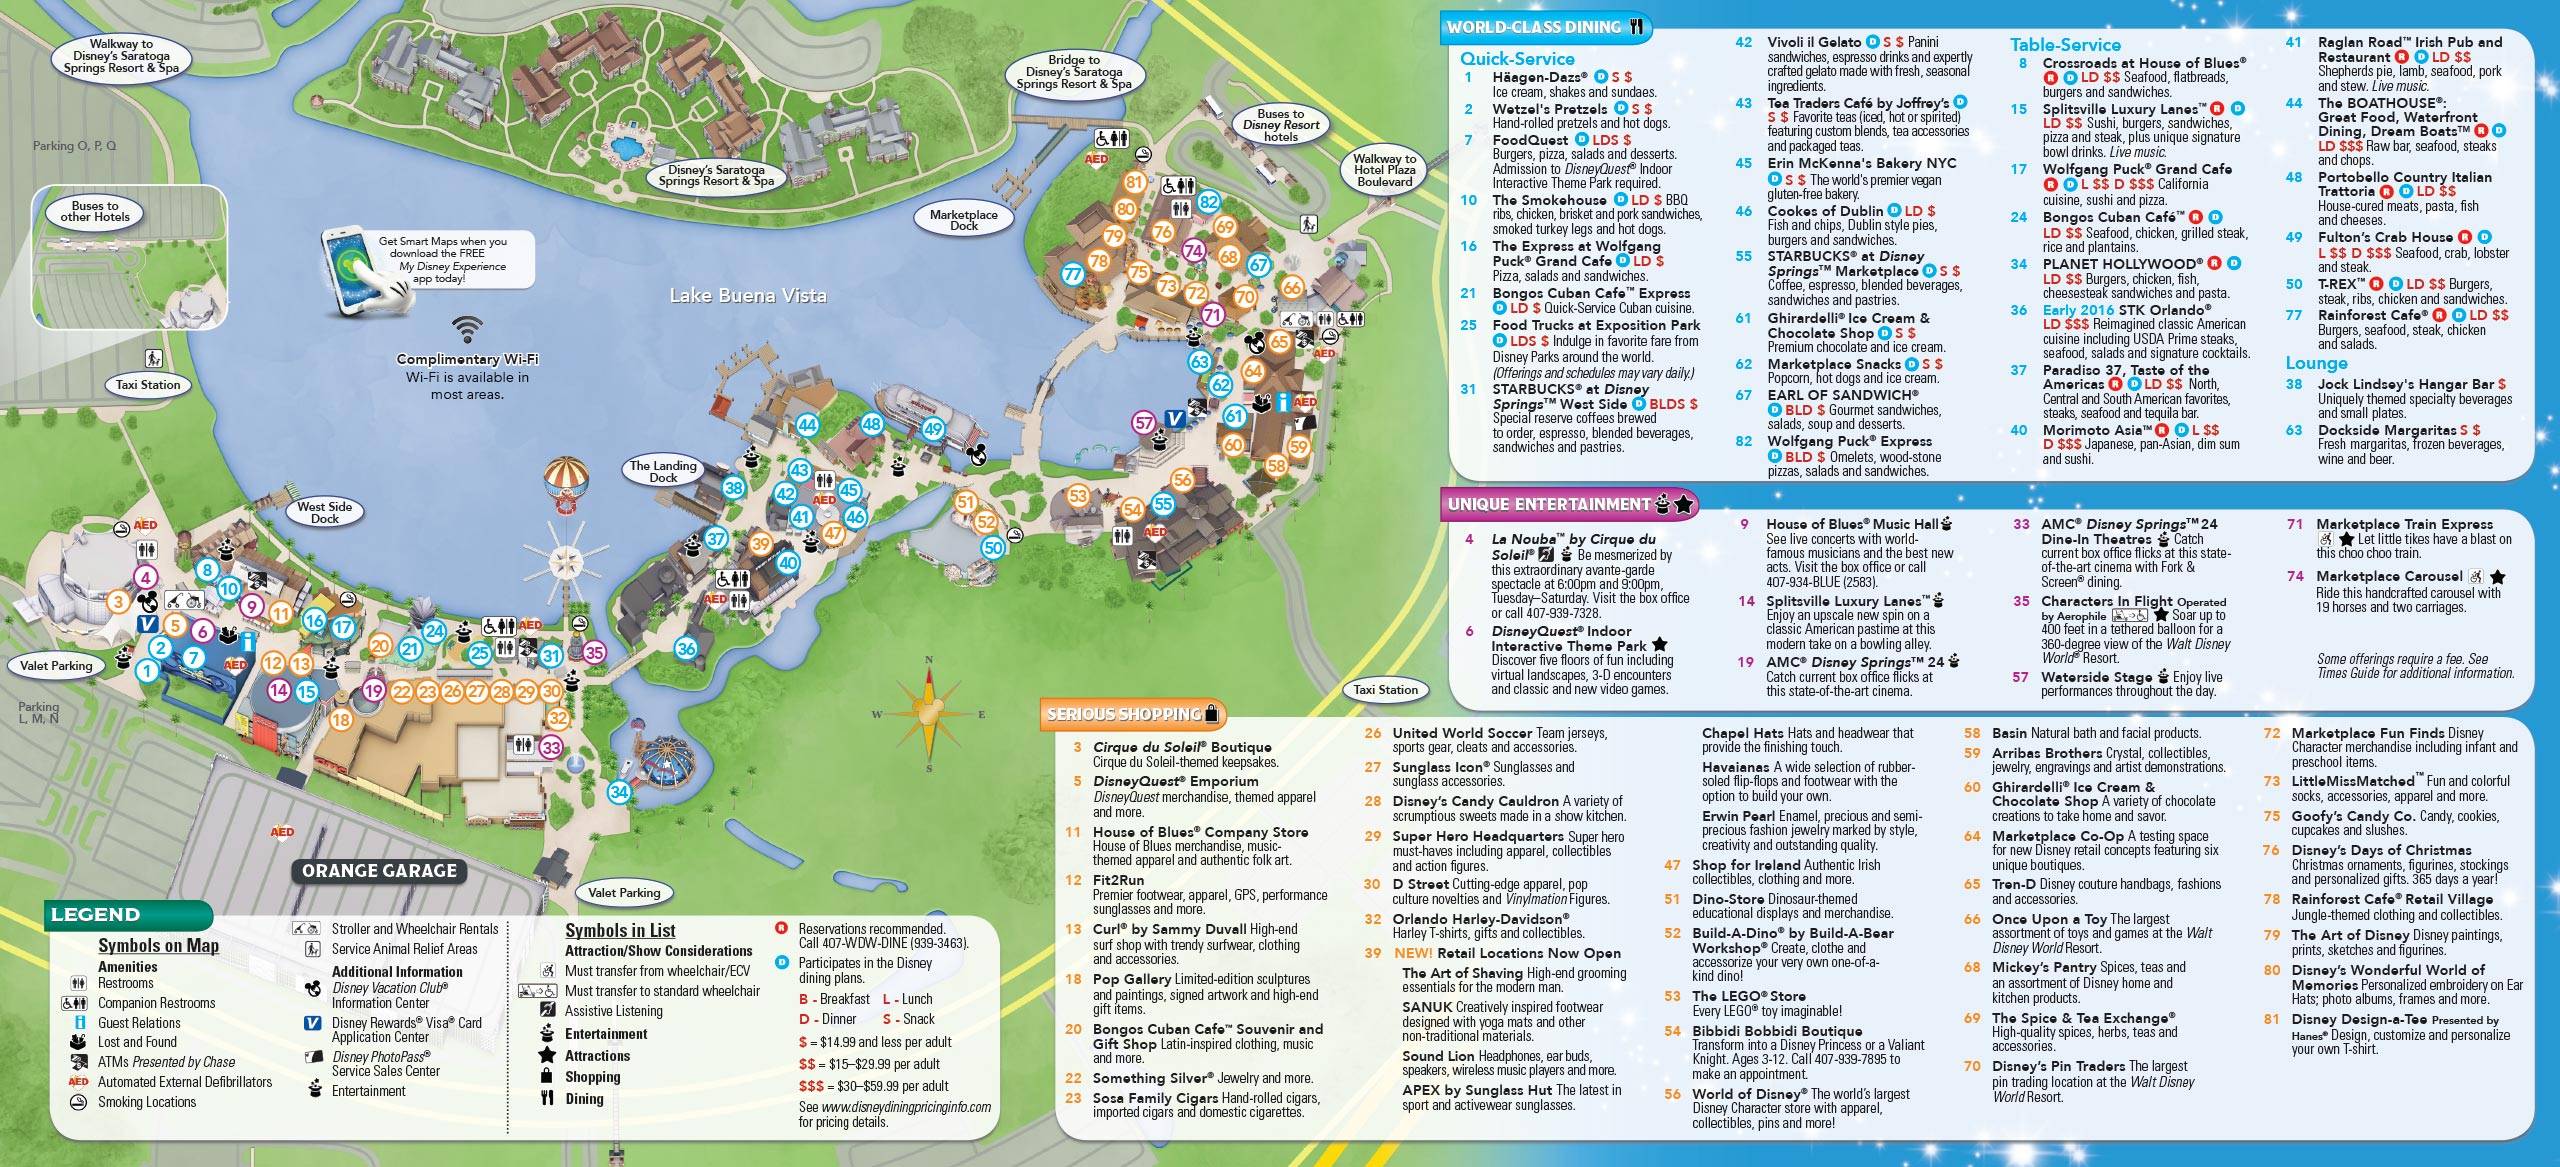 Disney Springs guide map - Back